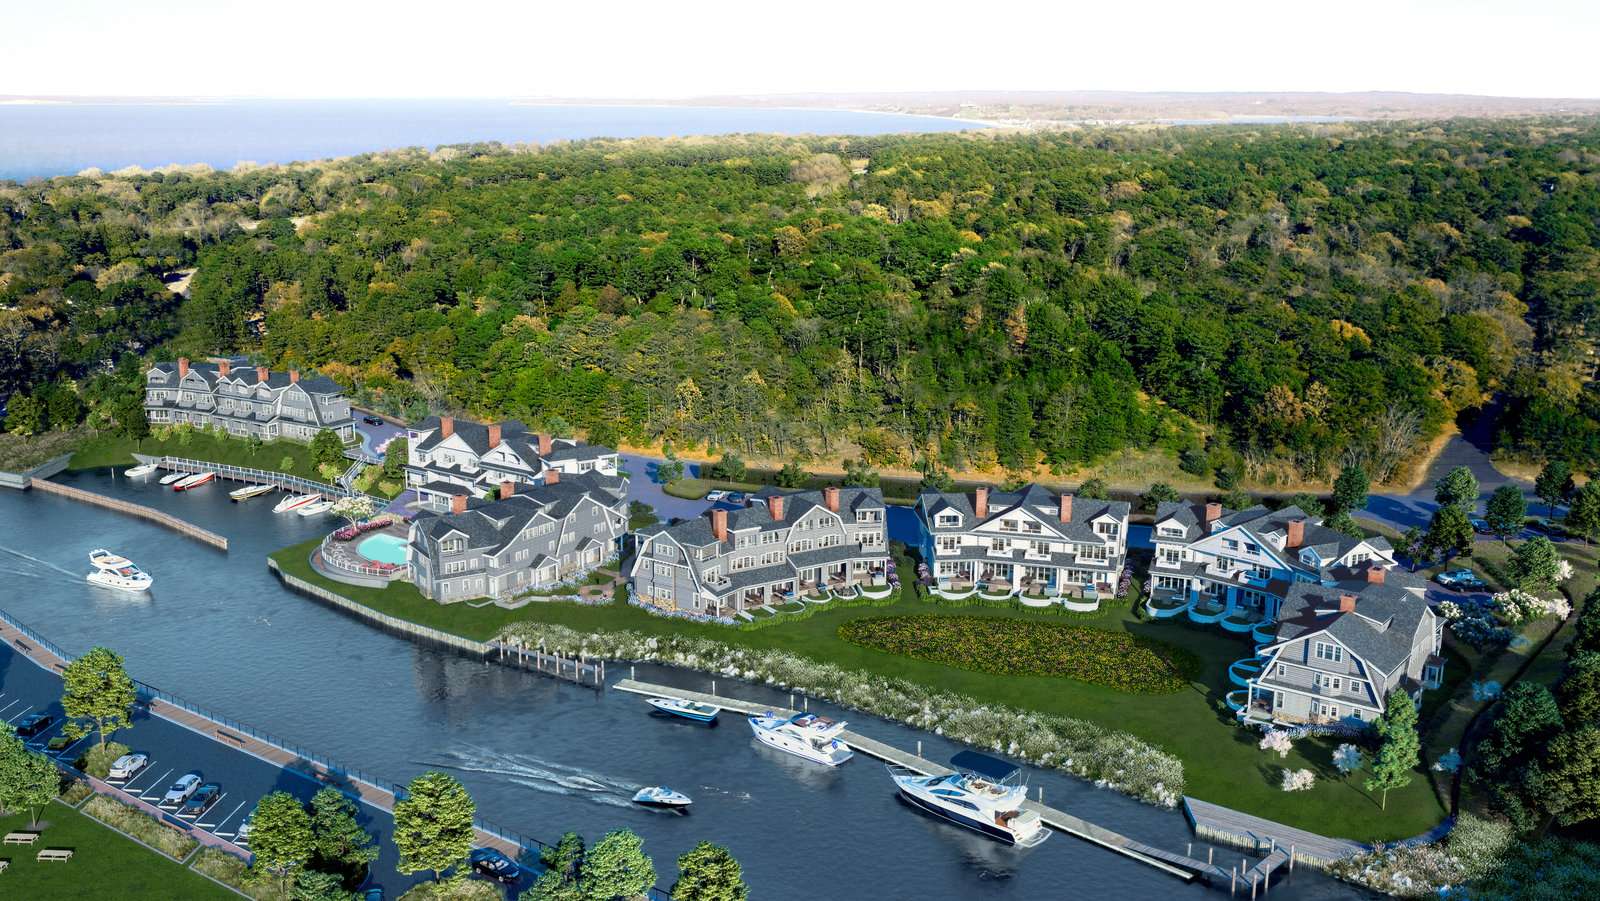 Canale navigabile degli Hamptons puzzle online